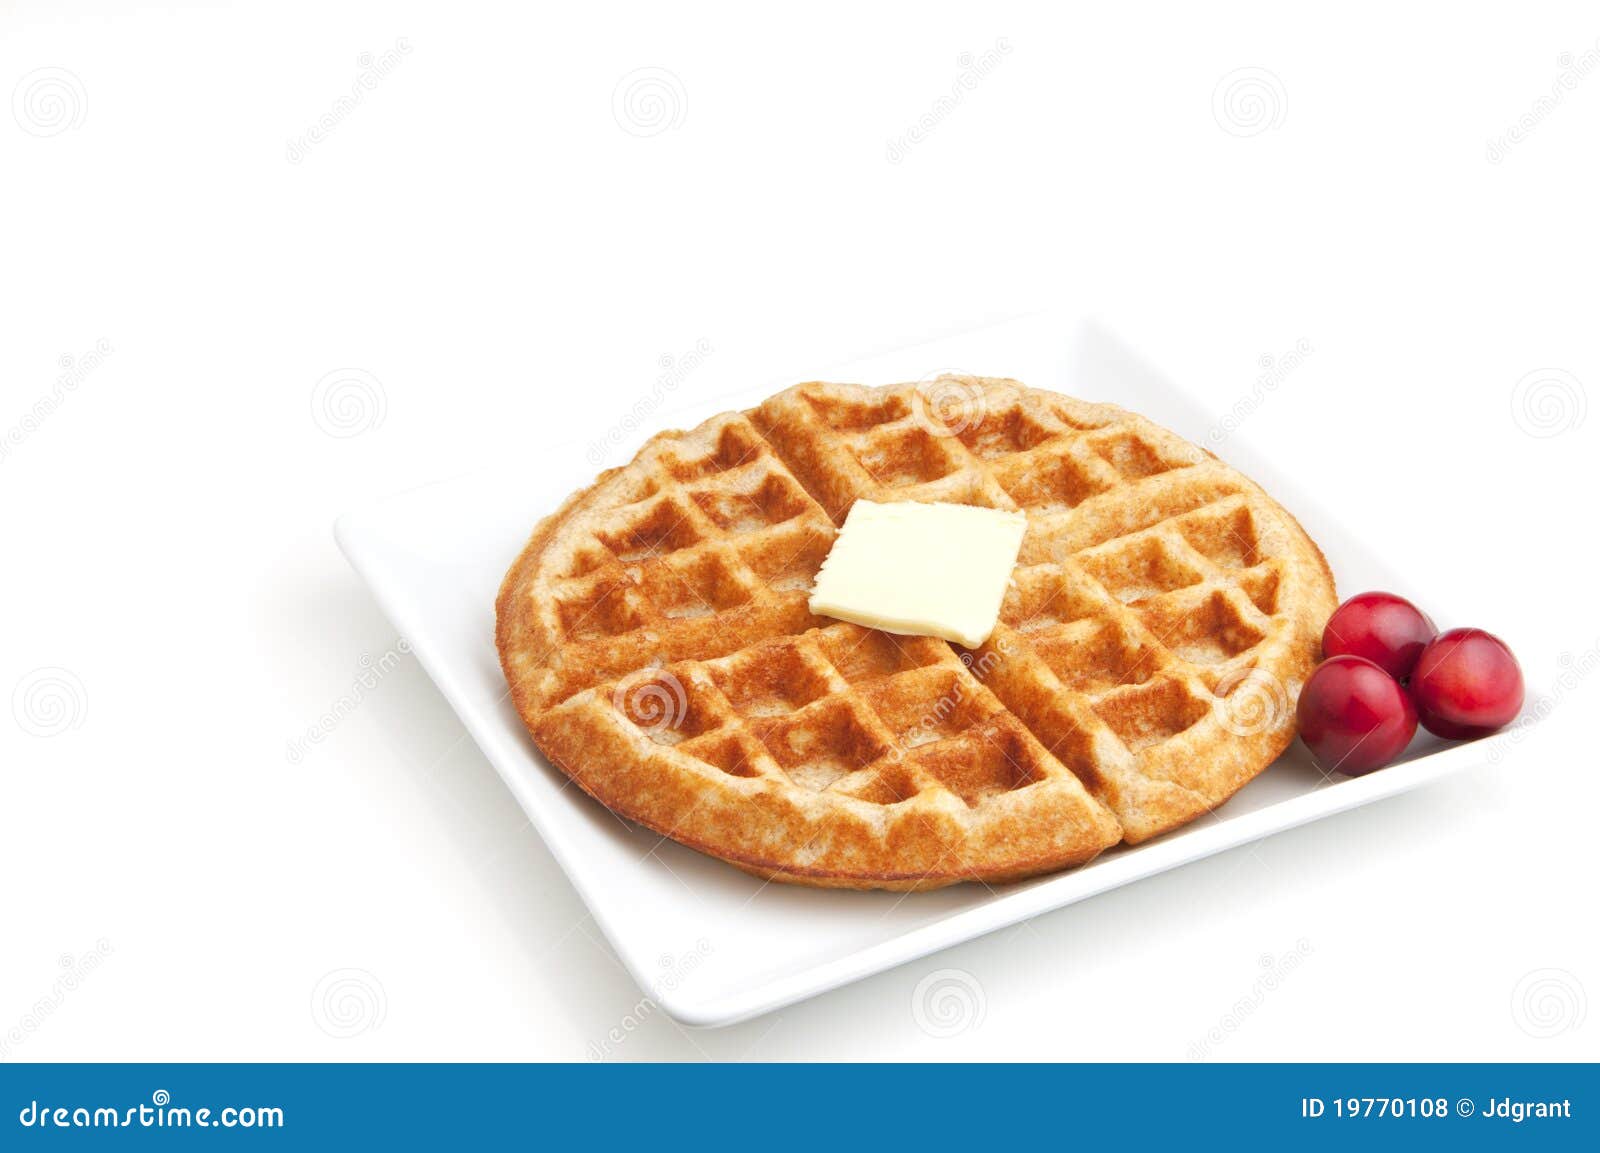 belgian waffle